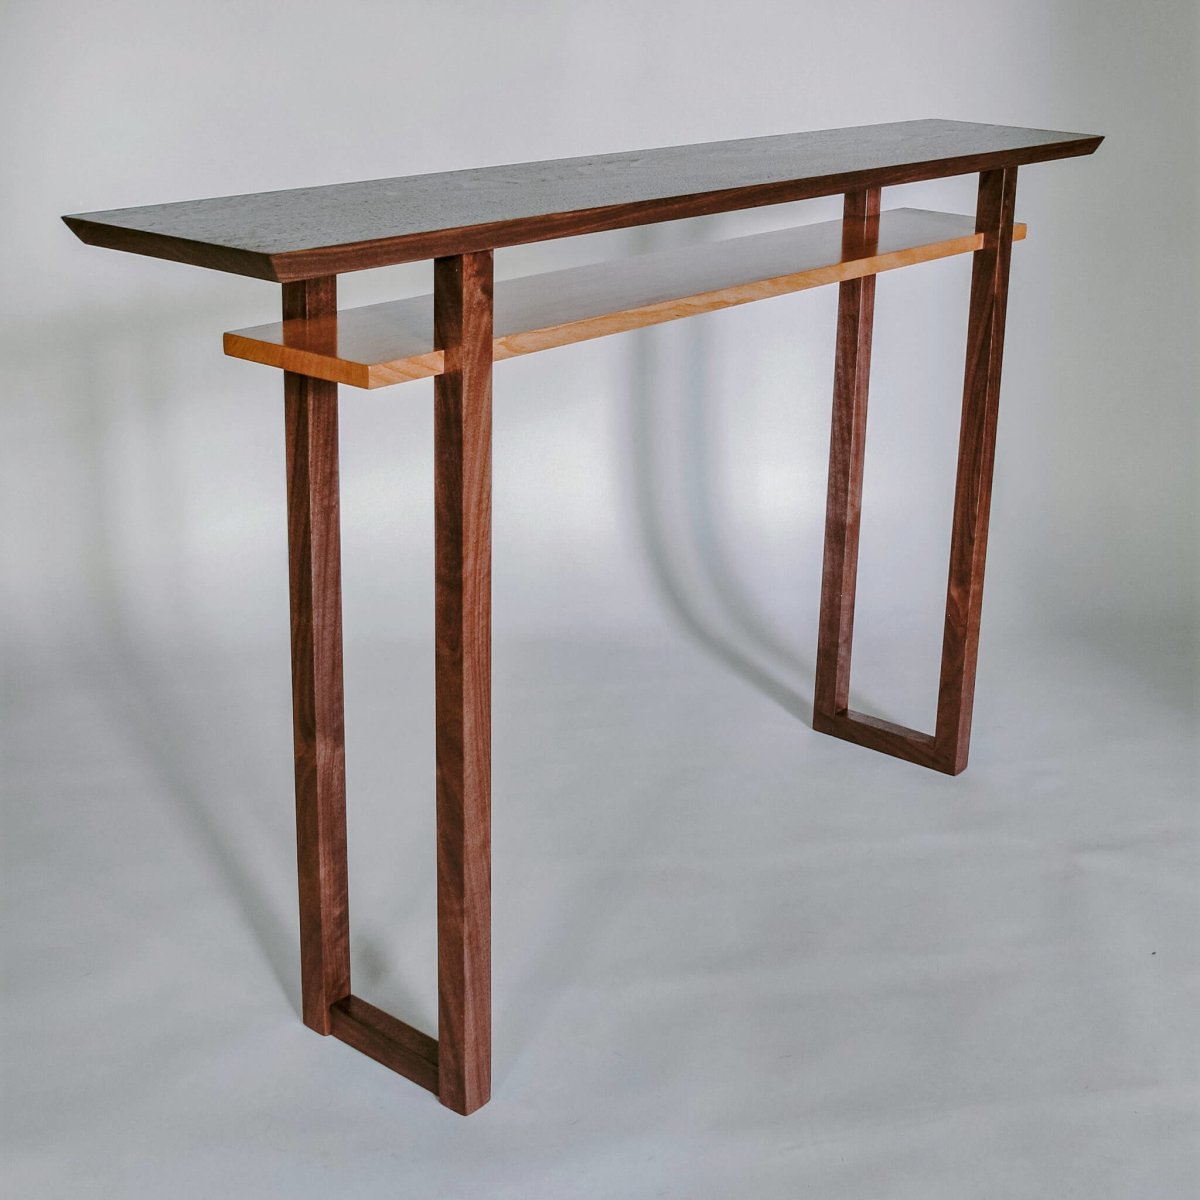 A walnut wood console table with cherry shelf.  A modern wood furniture design from Mokuzai Furniture